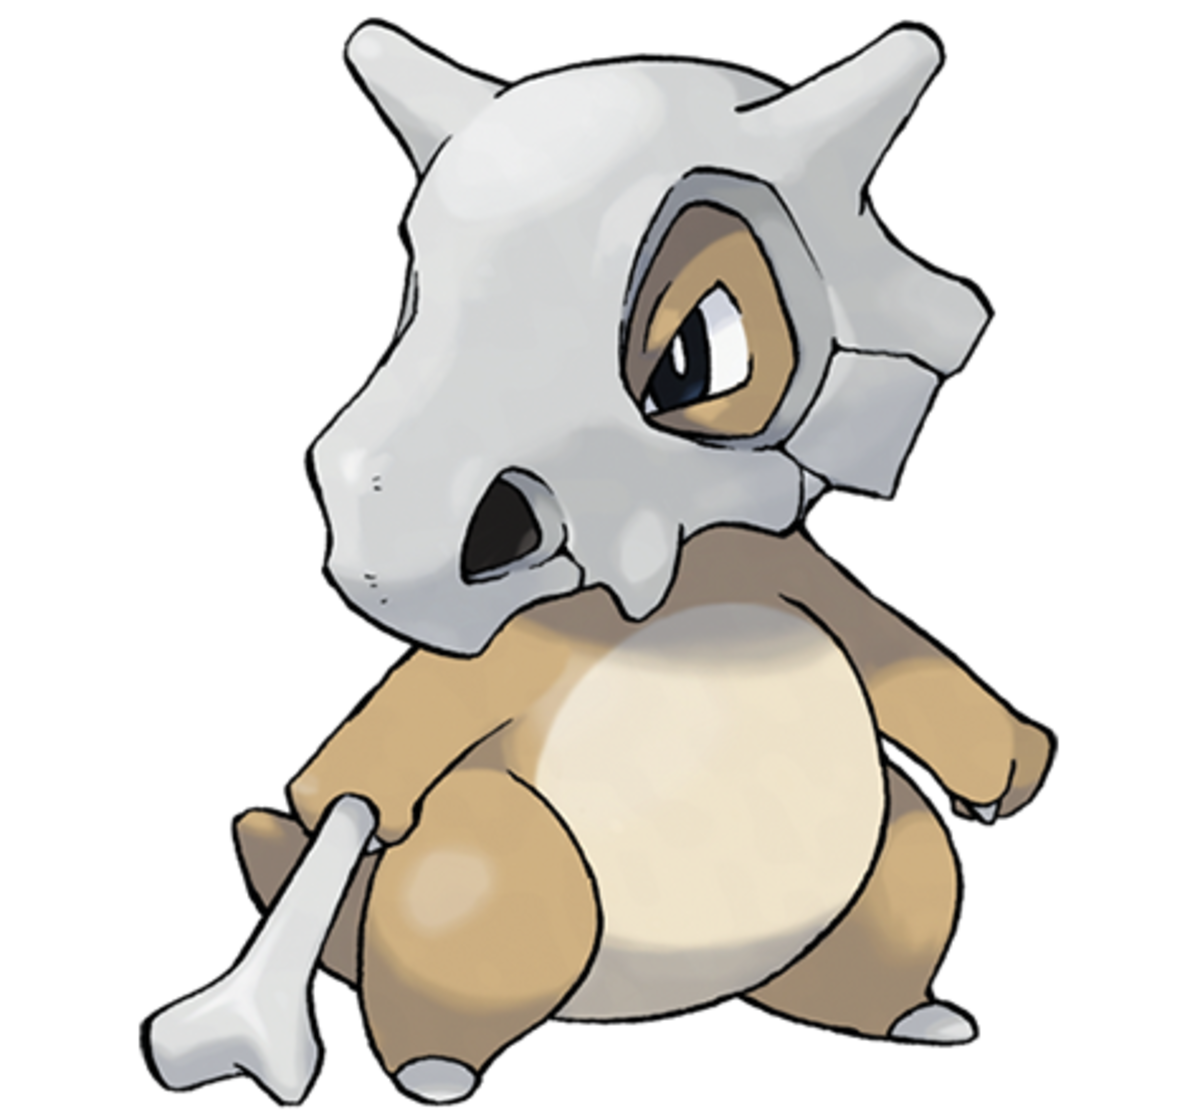 Cubone from the "Pokémon" Series